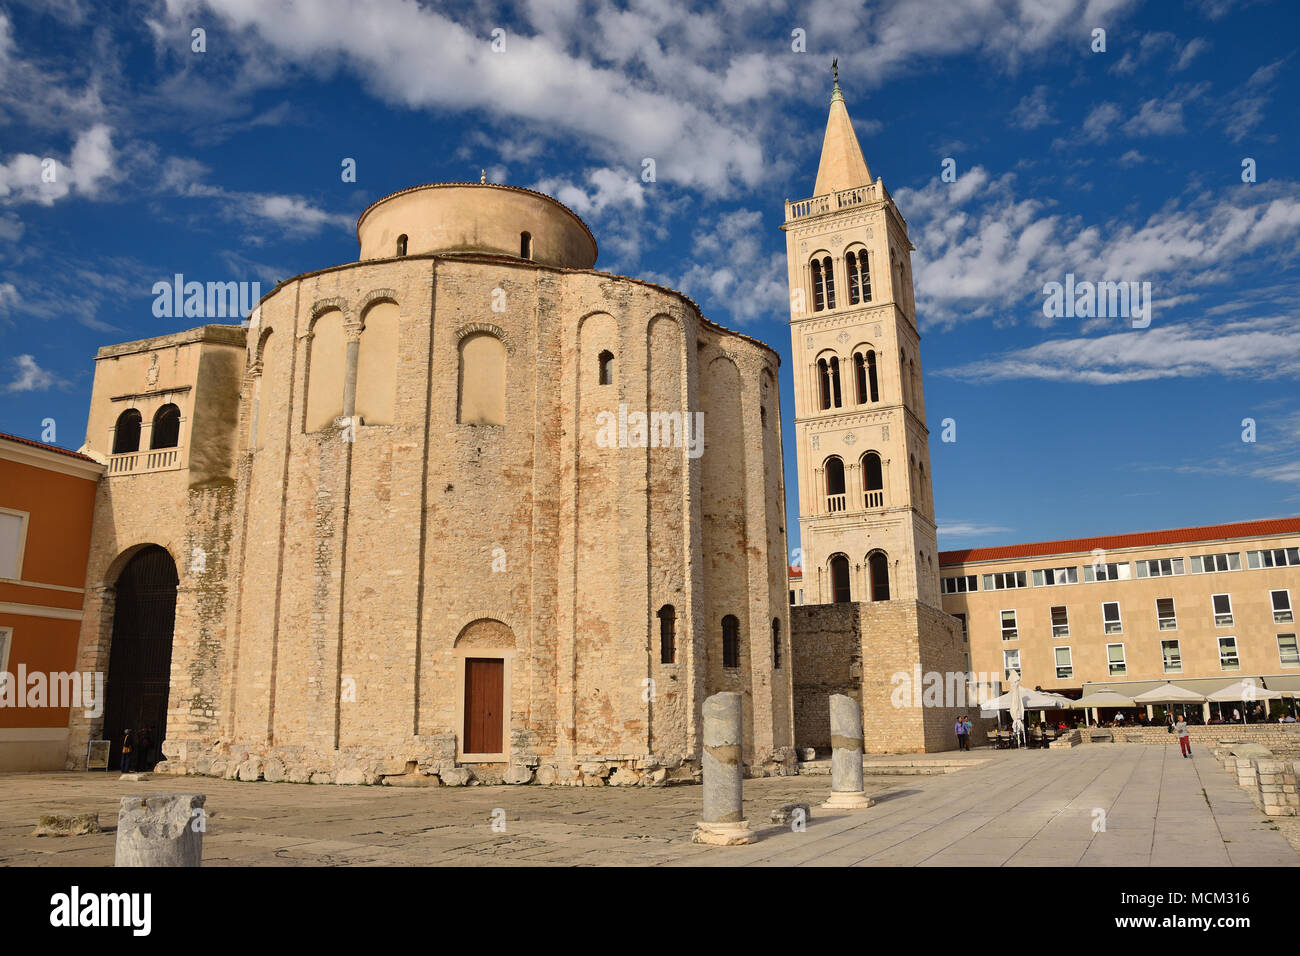 Church of St. Donatus in Zadar - famous historic Croatian city. Stock Photo